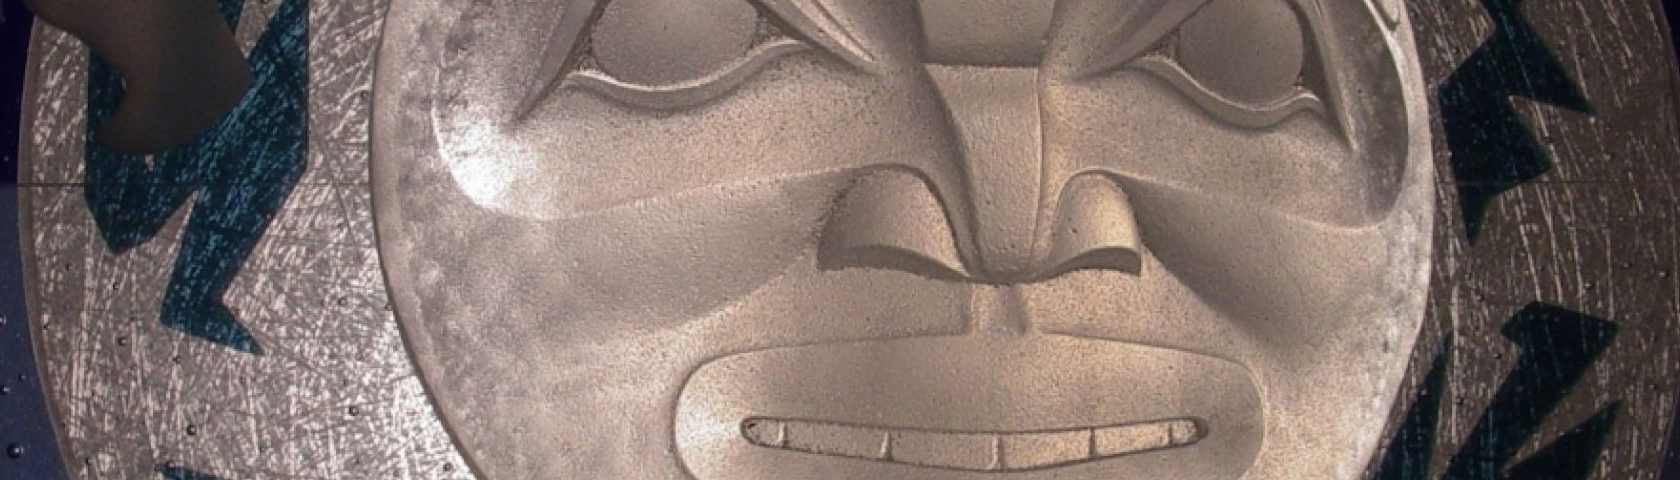 Close-up of an Indigenous artifact of a face